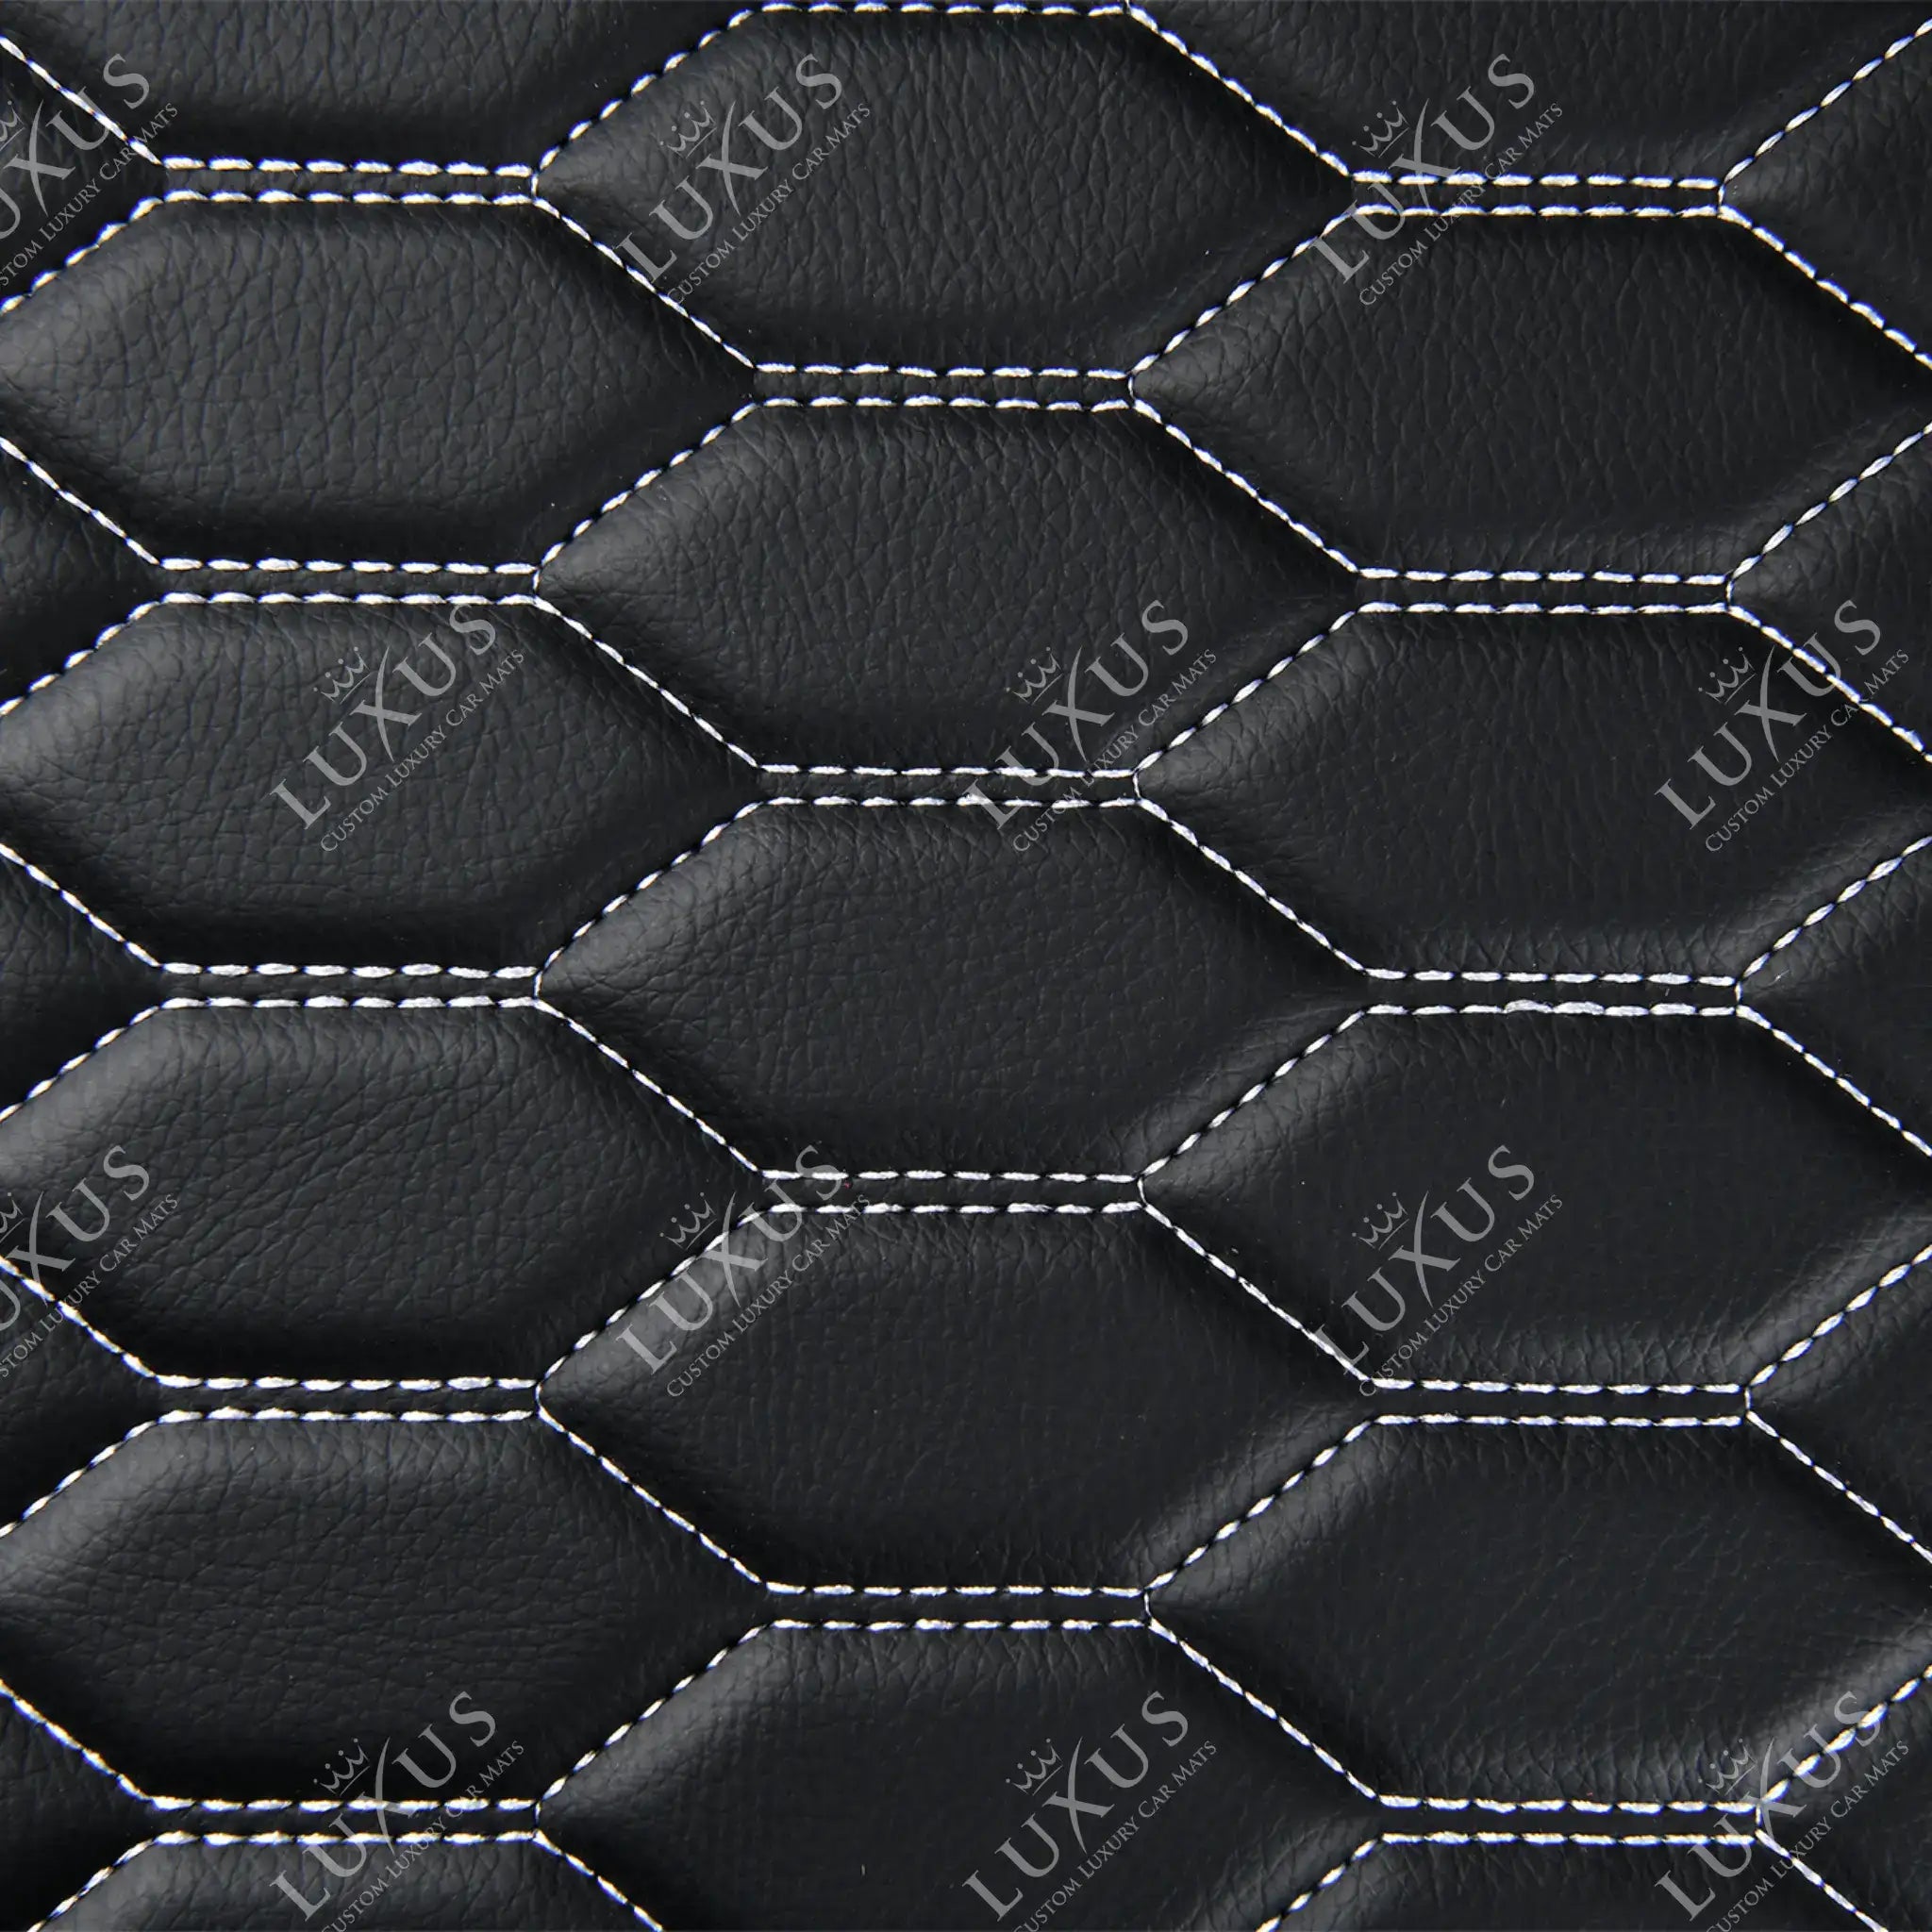 NEW Black & White Stitching Honeycomb Luxury Boot/Trunk Mat